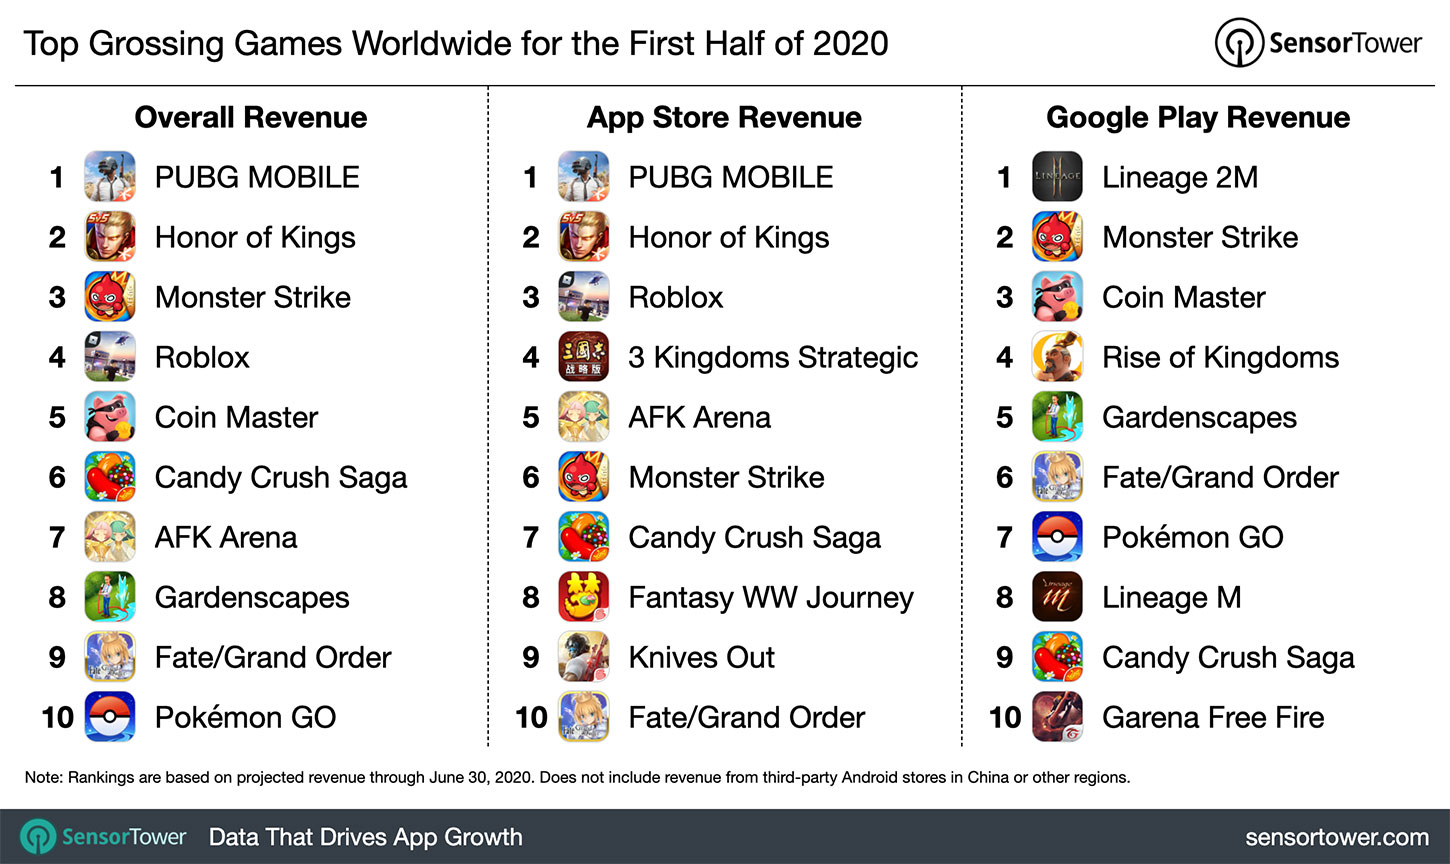 1H 2020 Top Grossing Games Worldwide